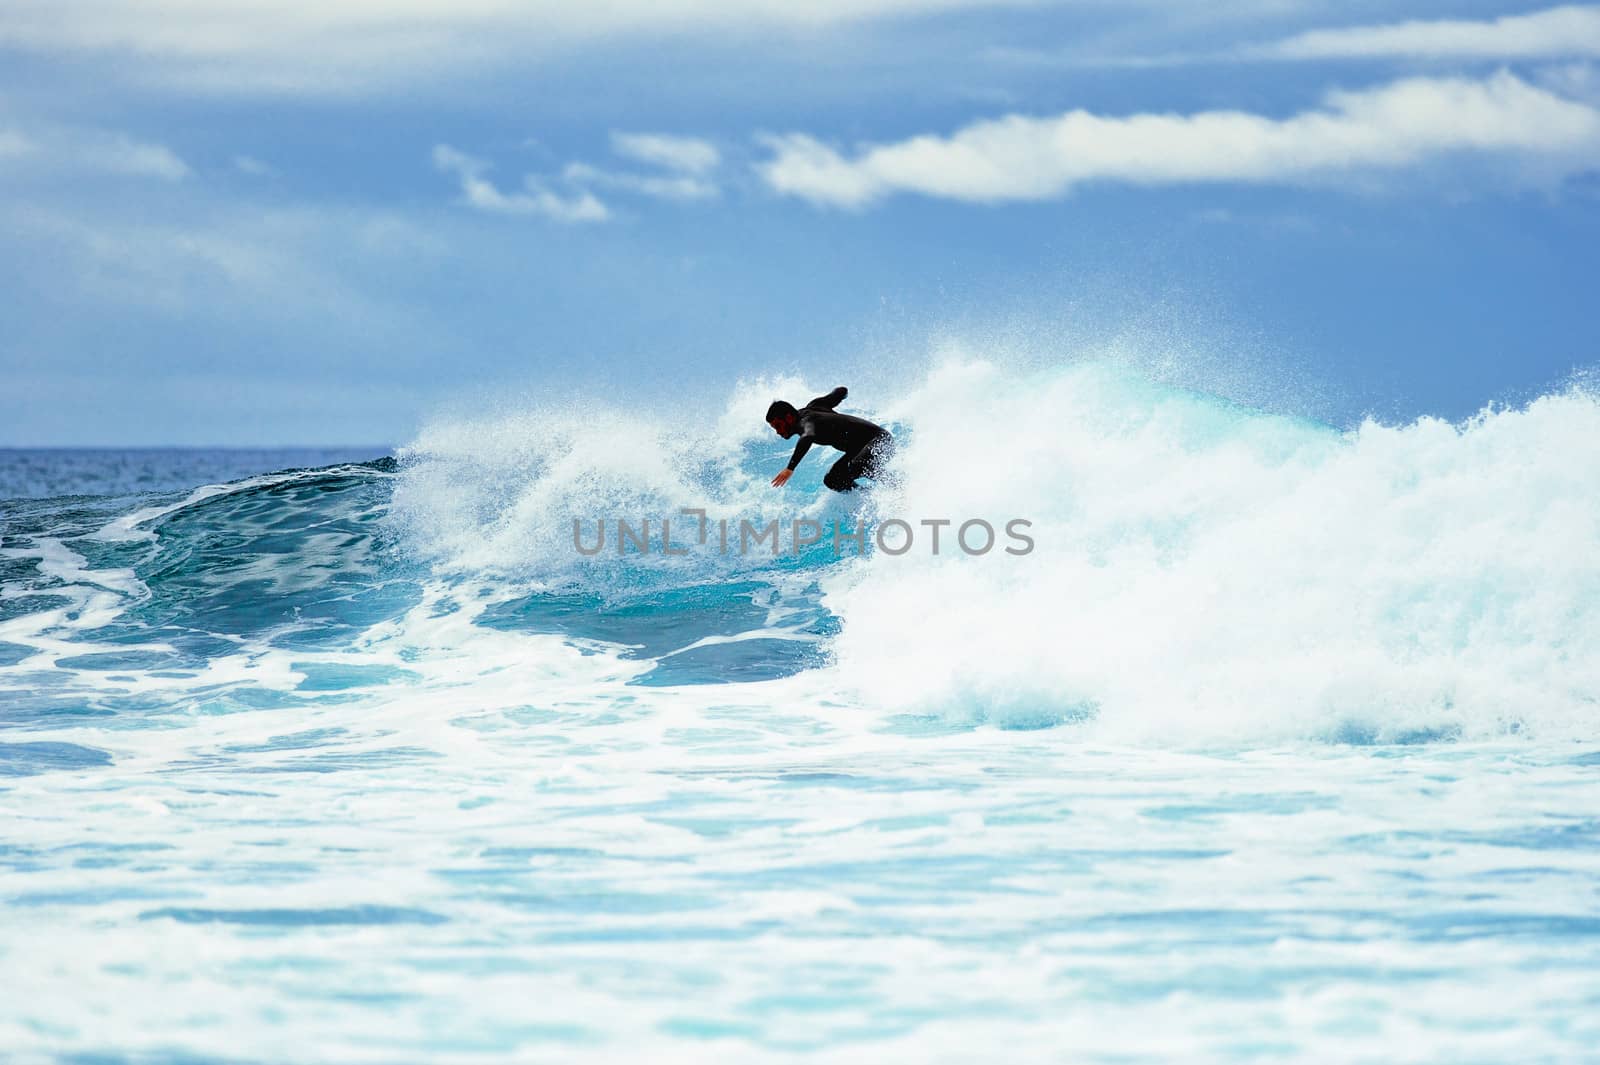 Surf-rider by styf22